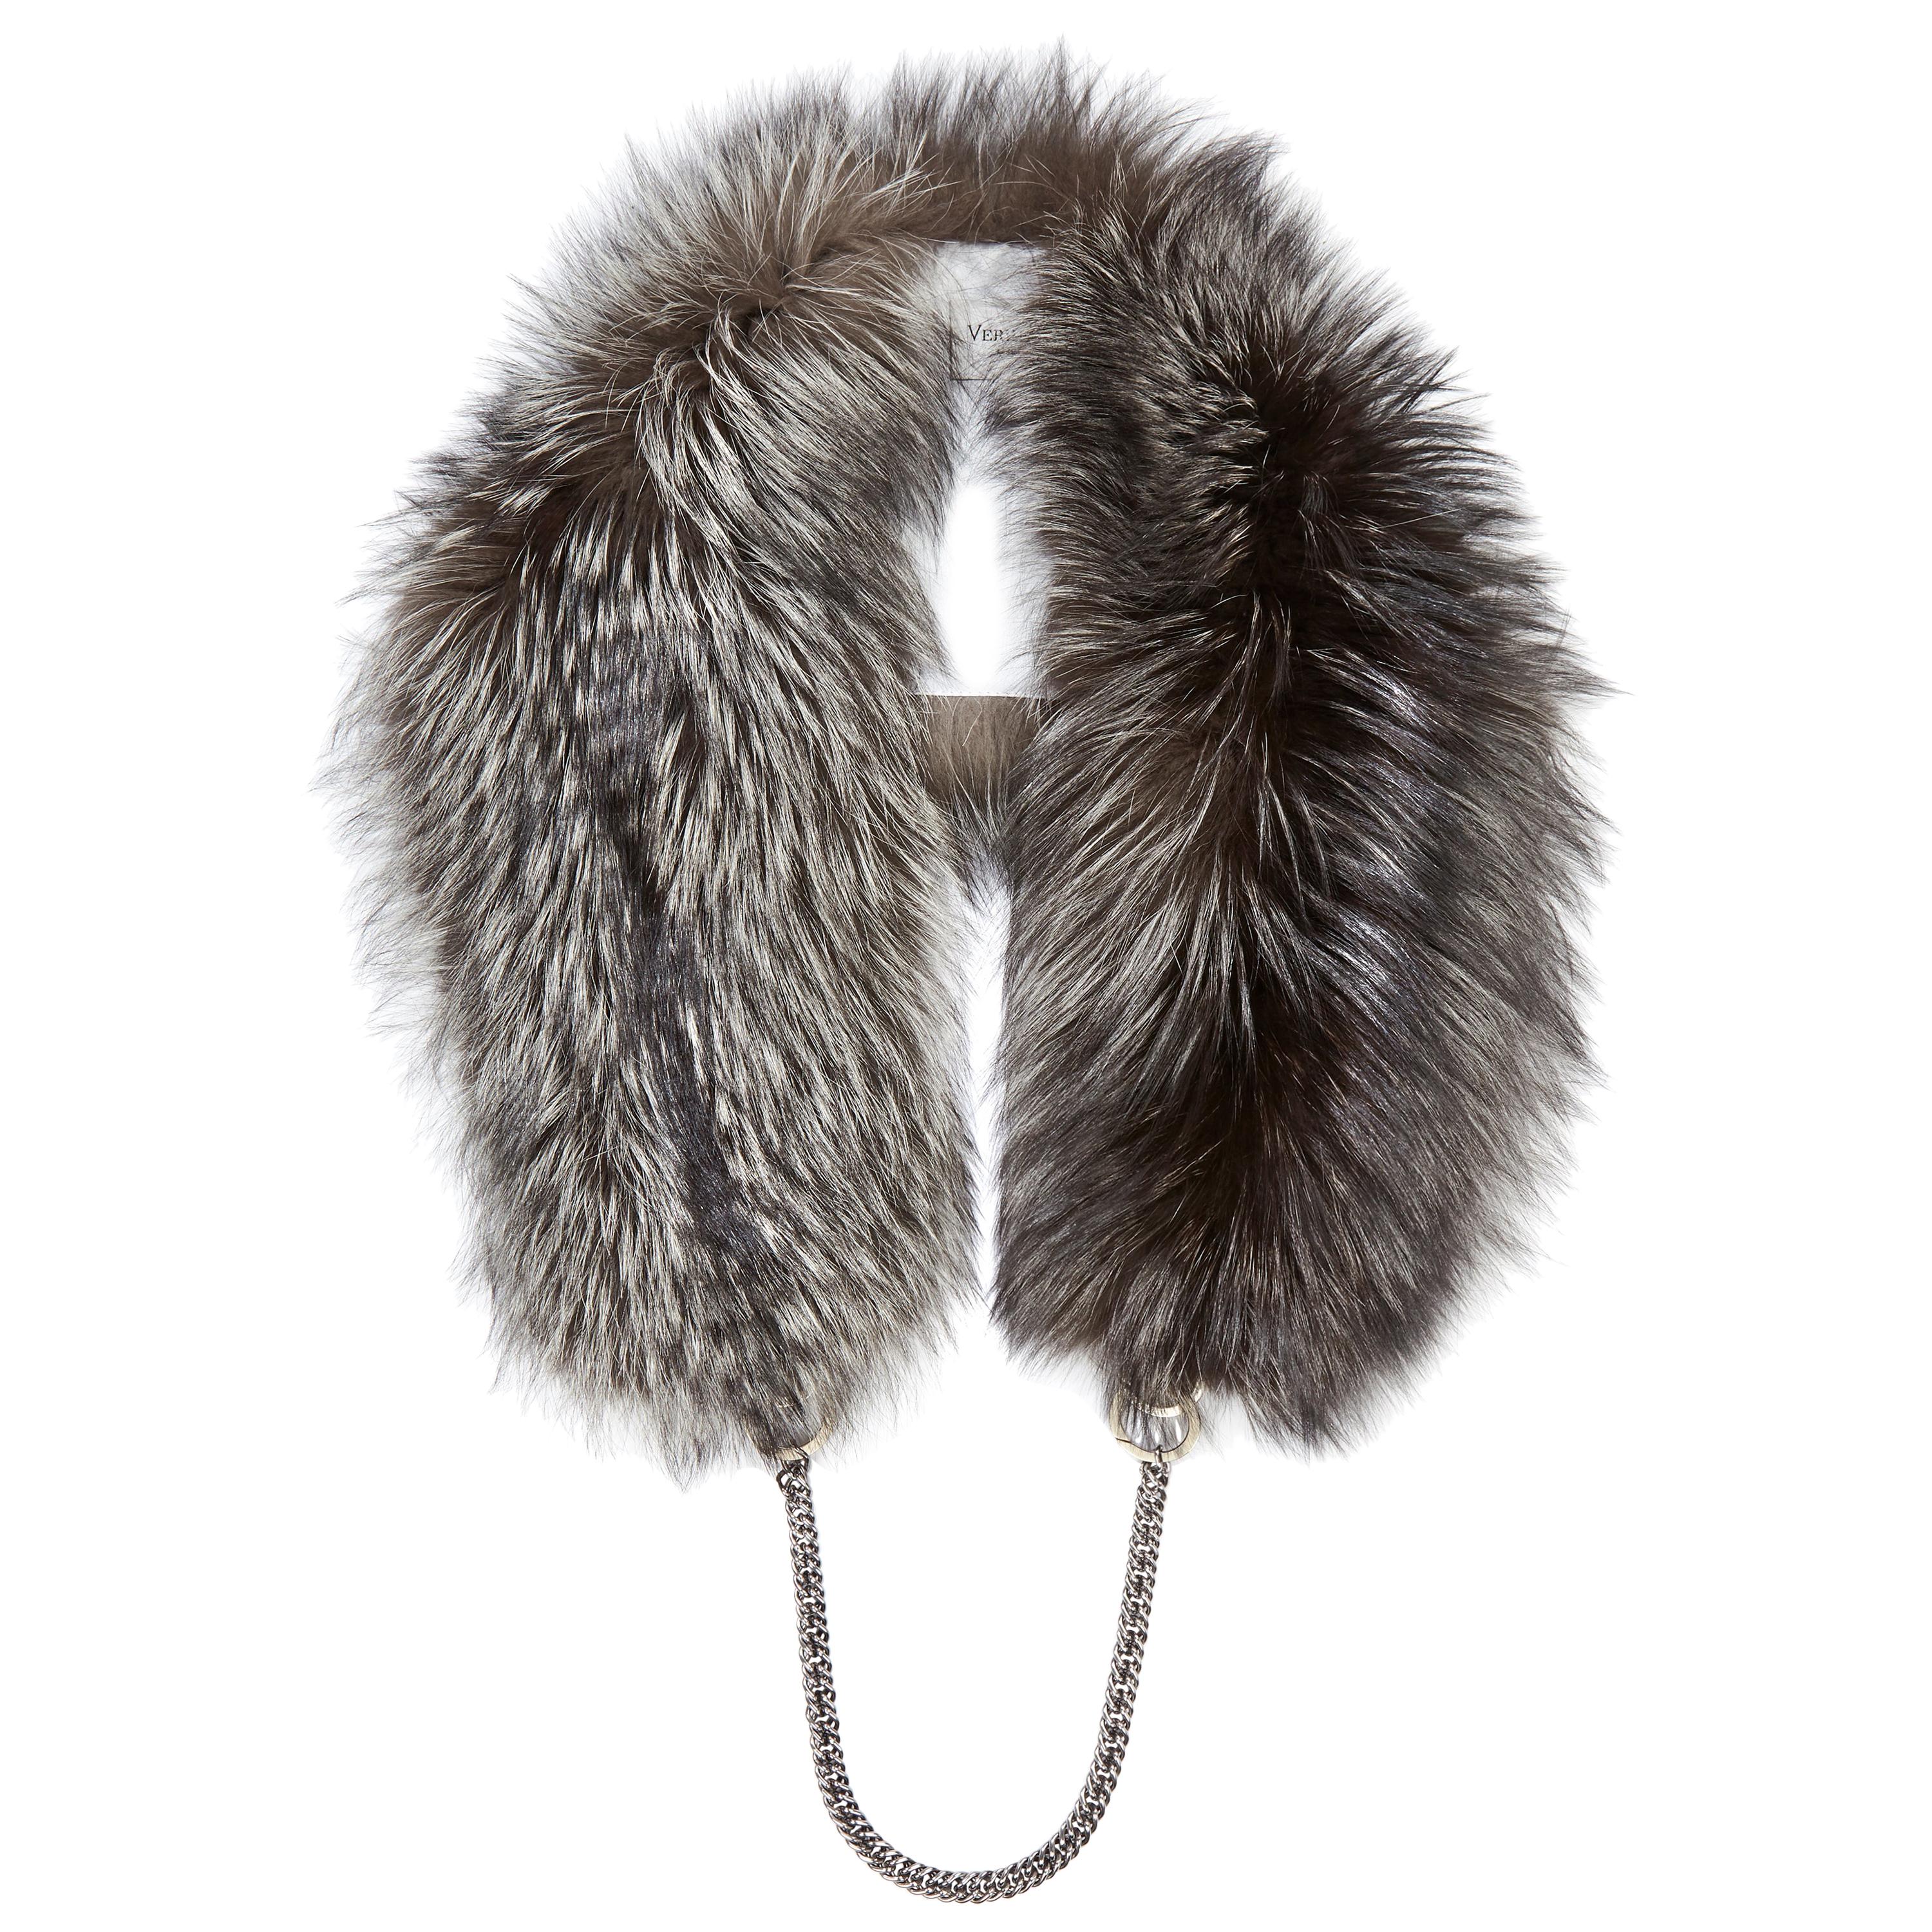 Verheyen London Chained Stole in Metallic Silver Fox Fur with Chain 6 ways 